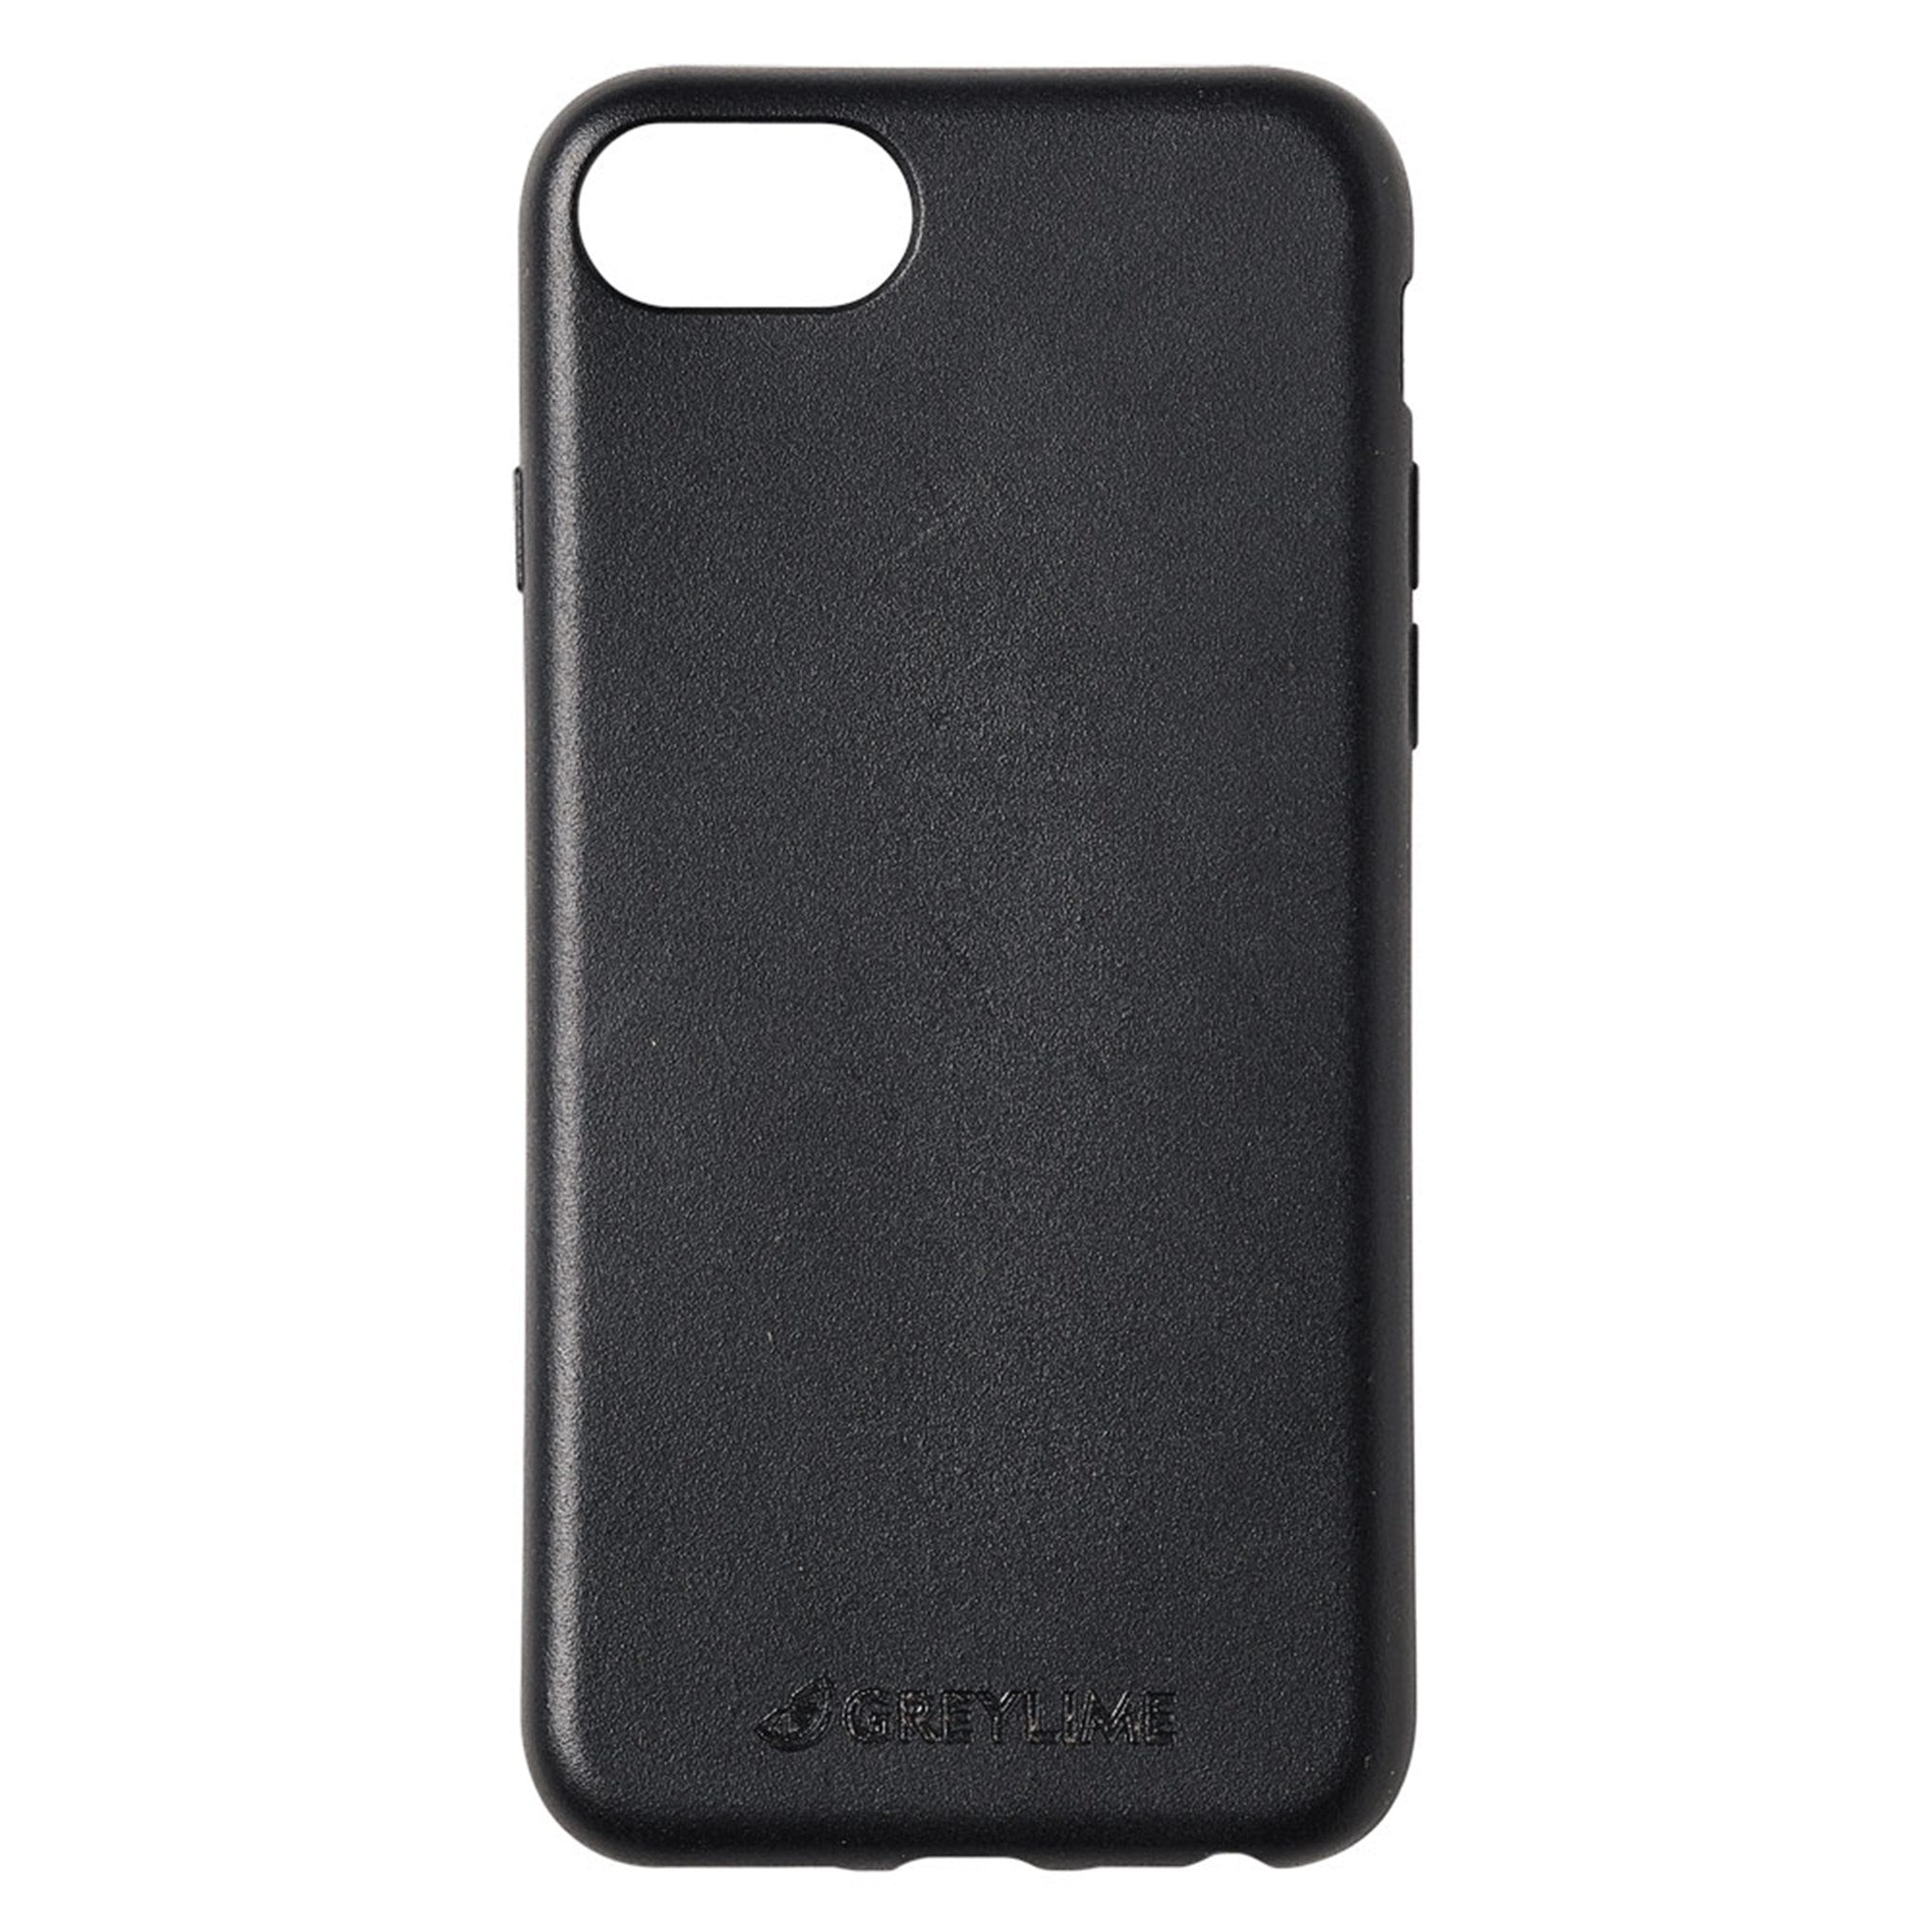 Se GreyLime iPhone 6/7/8 Plus biodegradable cover - Black hos Balar